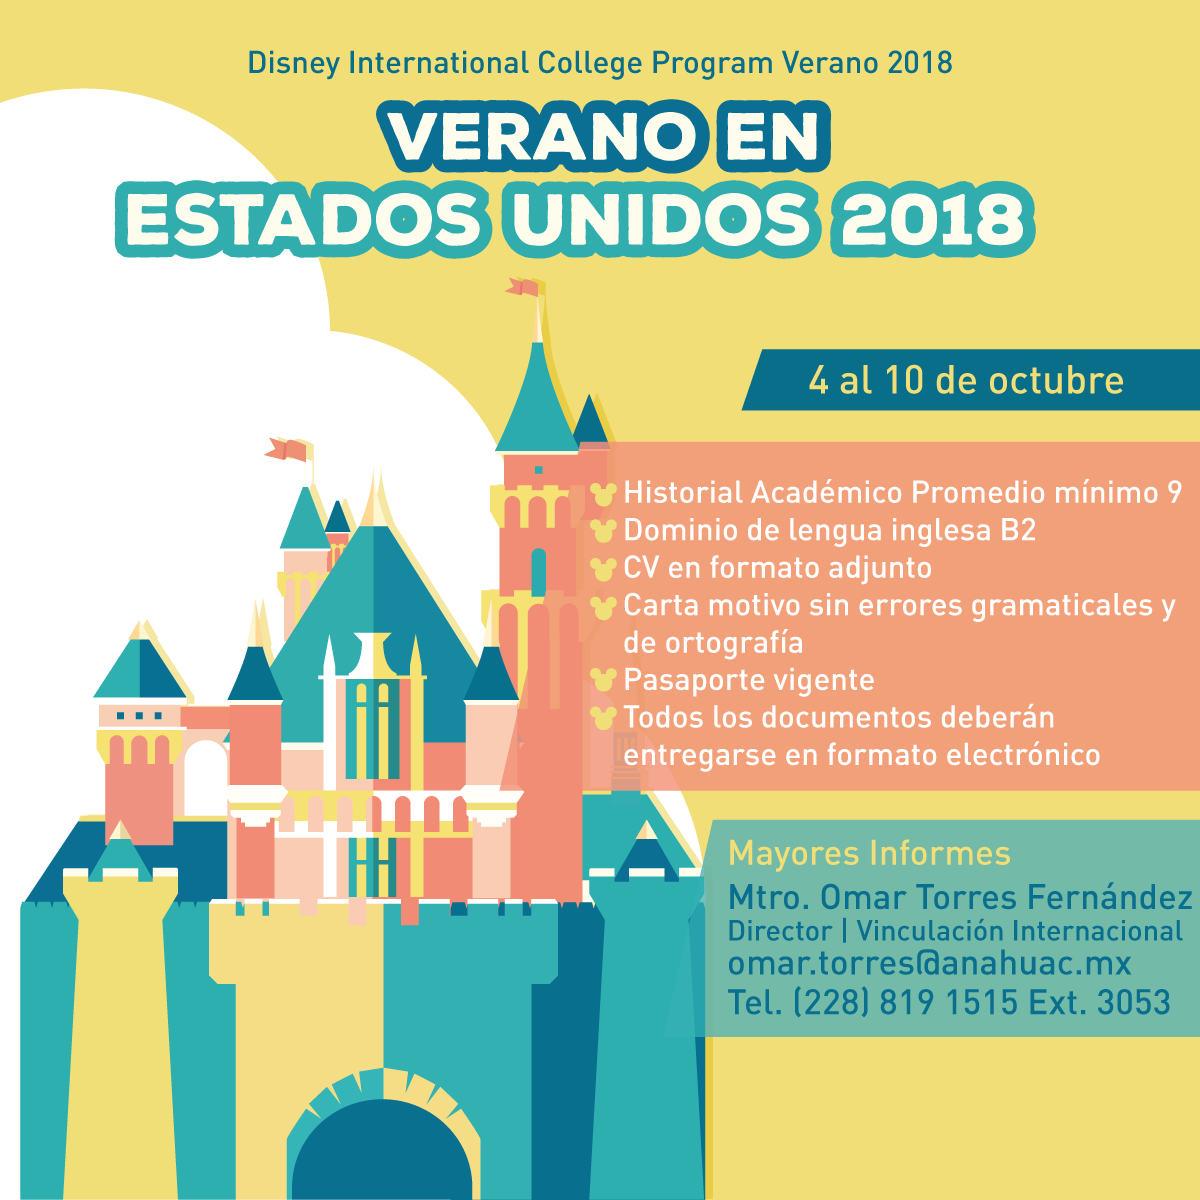 Disney International College Program Verano 2018